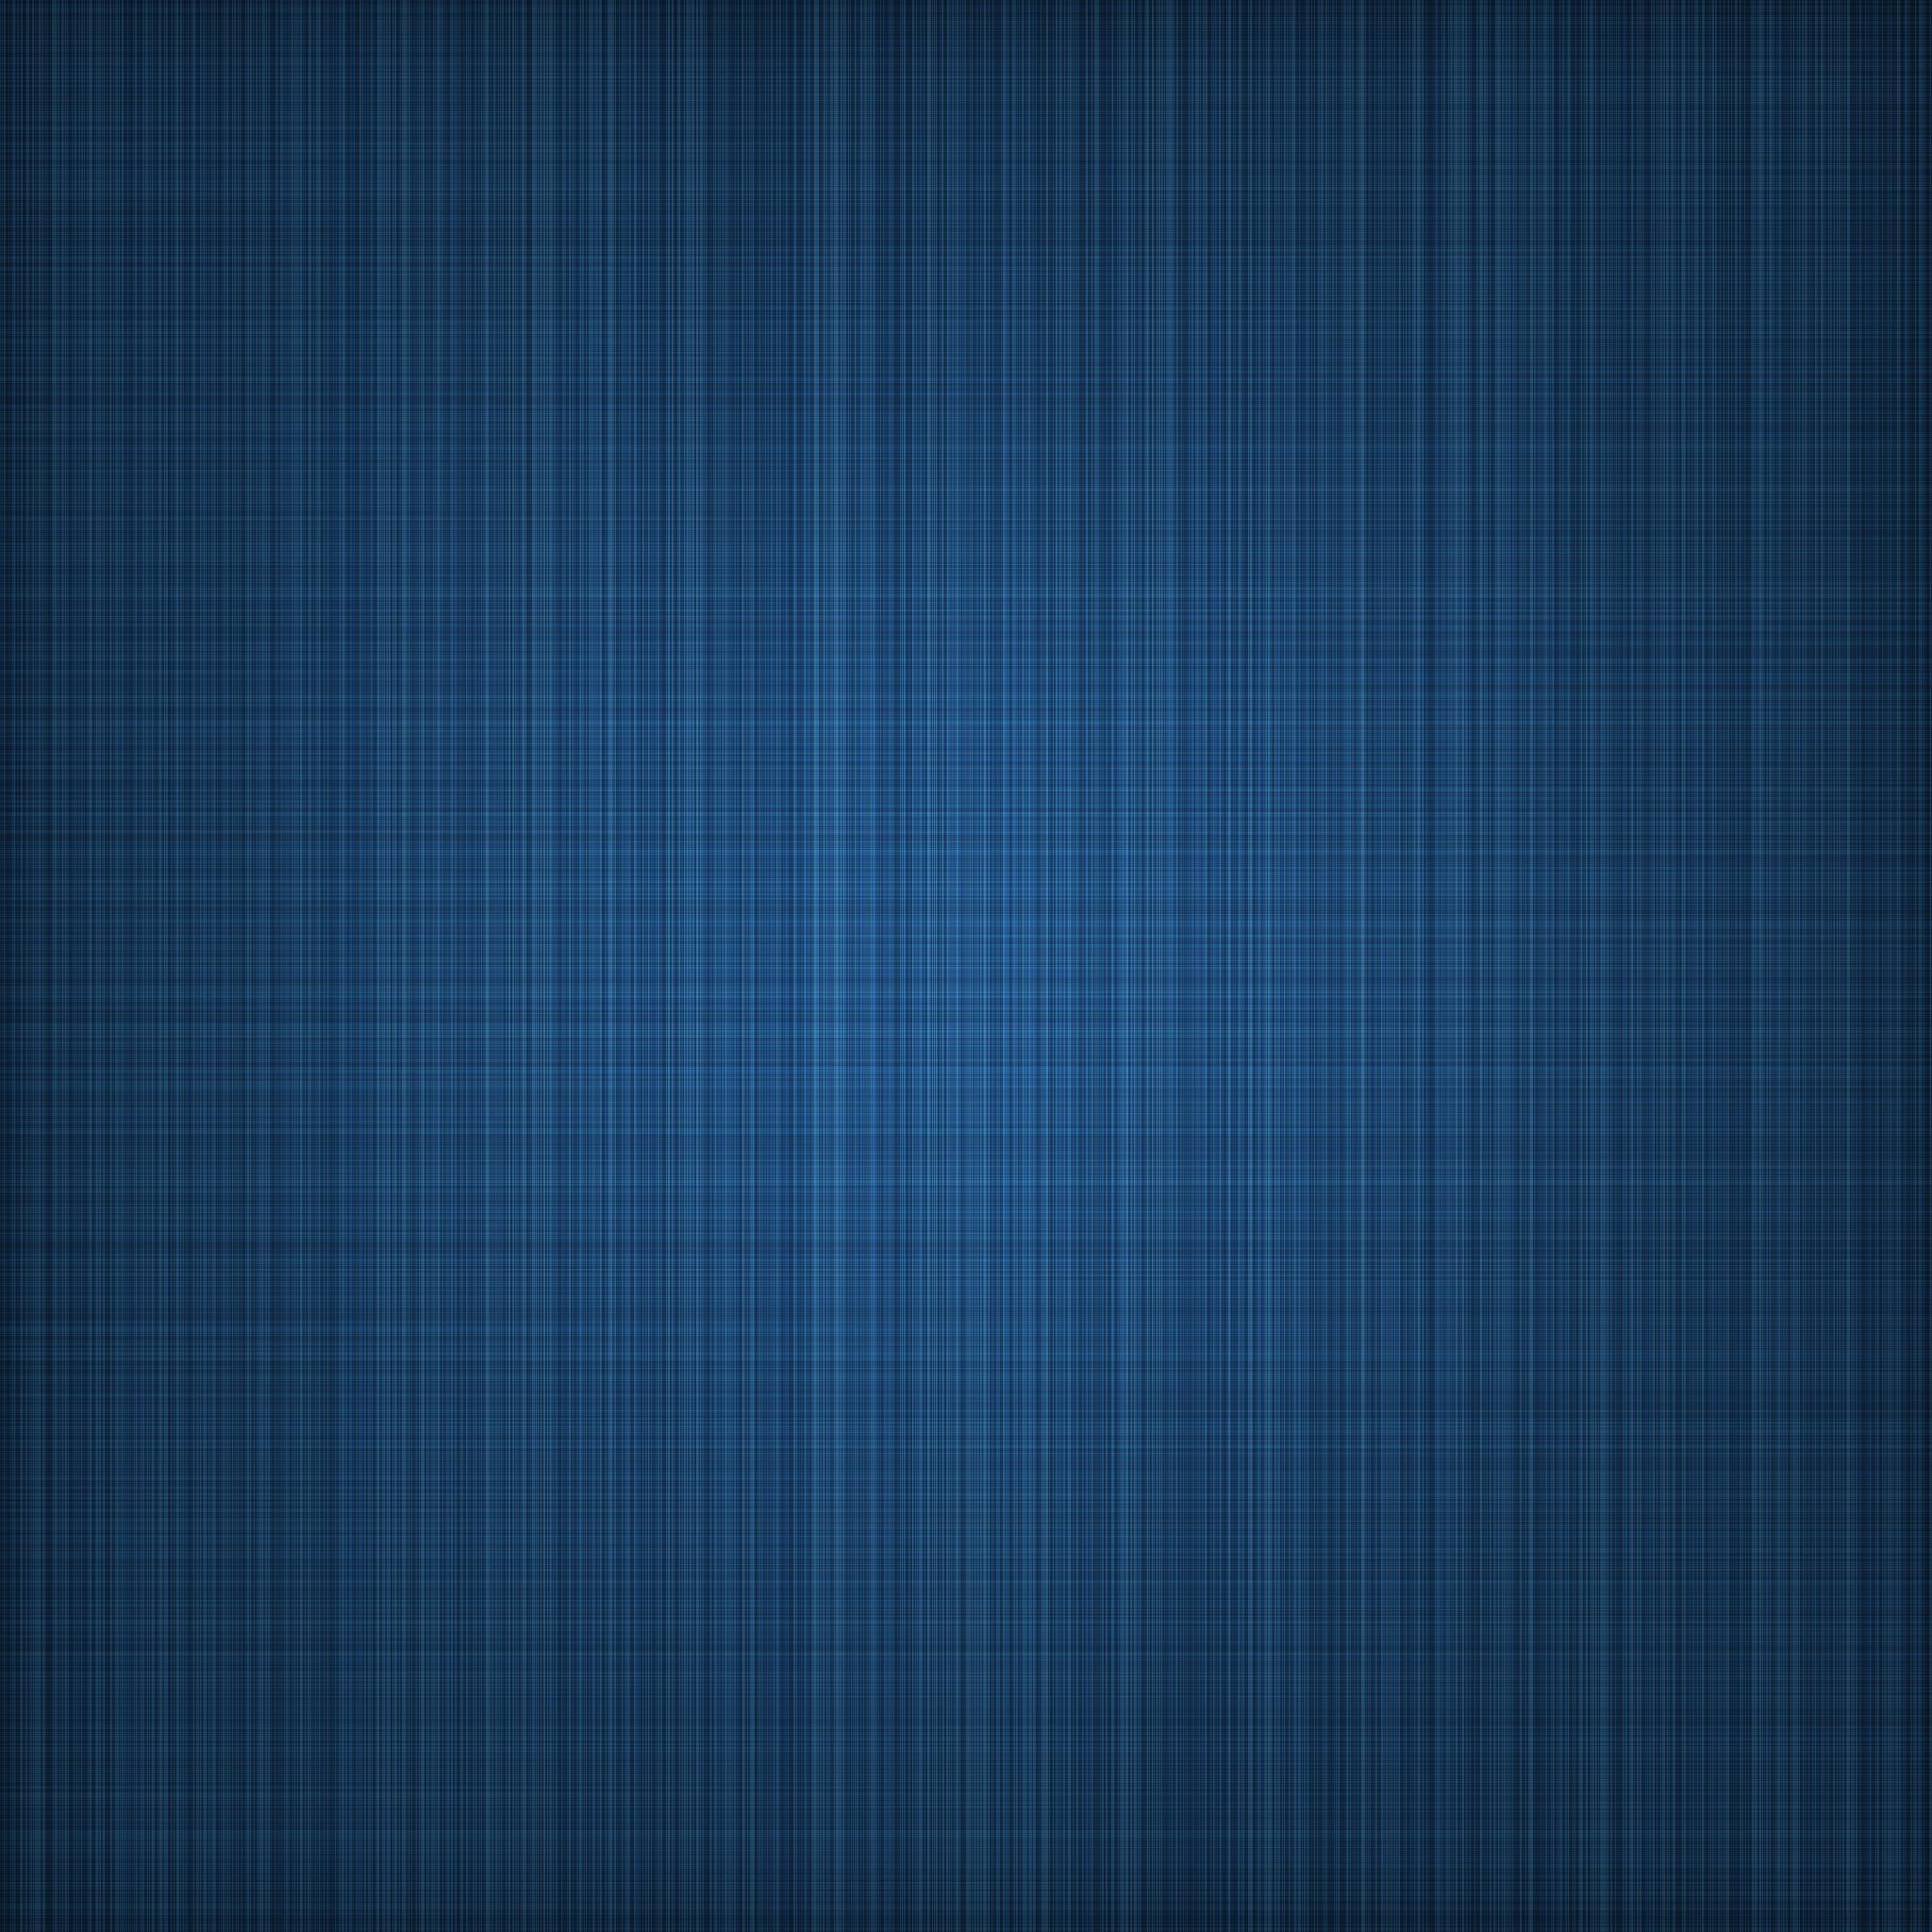 2048x2048px Retina iPad Air 2 Wallpaper